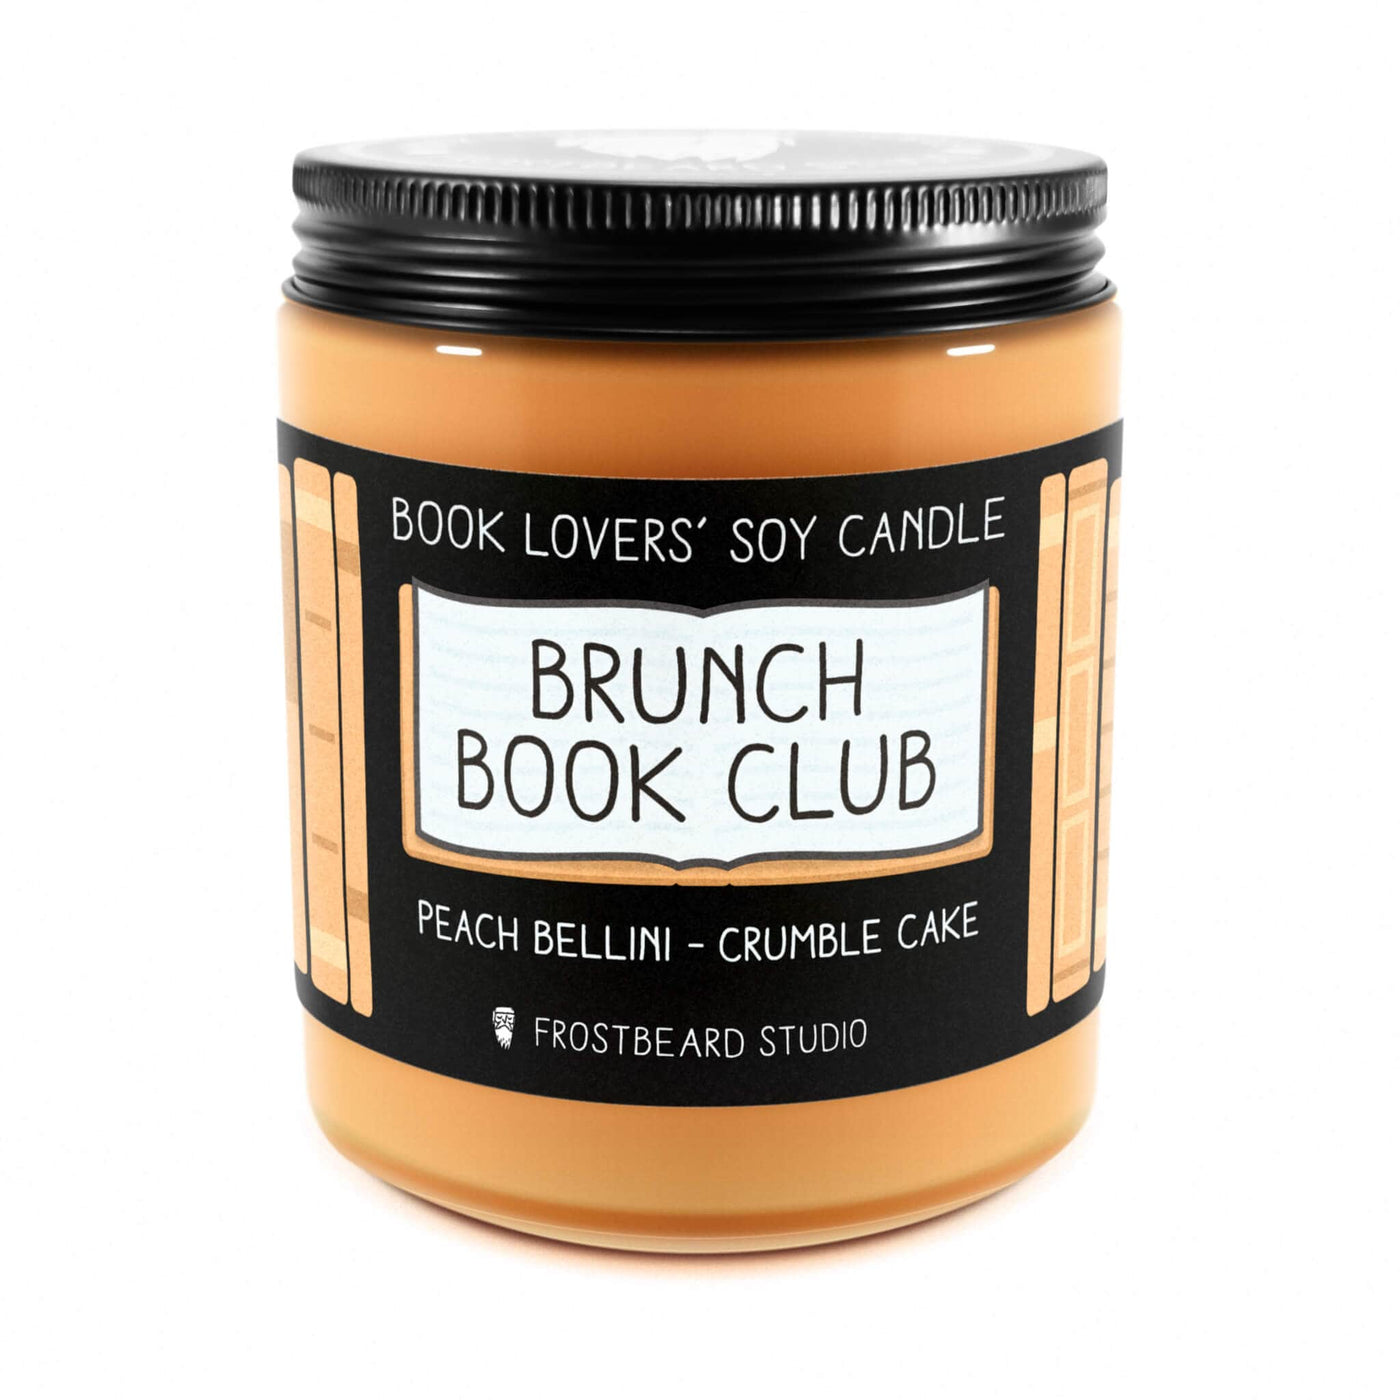 Brunch Book Club  -  8 oz Jar  -  Book Lovers' Soy Candle  -  Frostbeard Studio